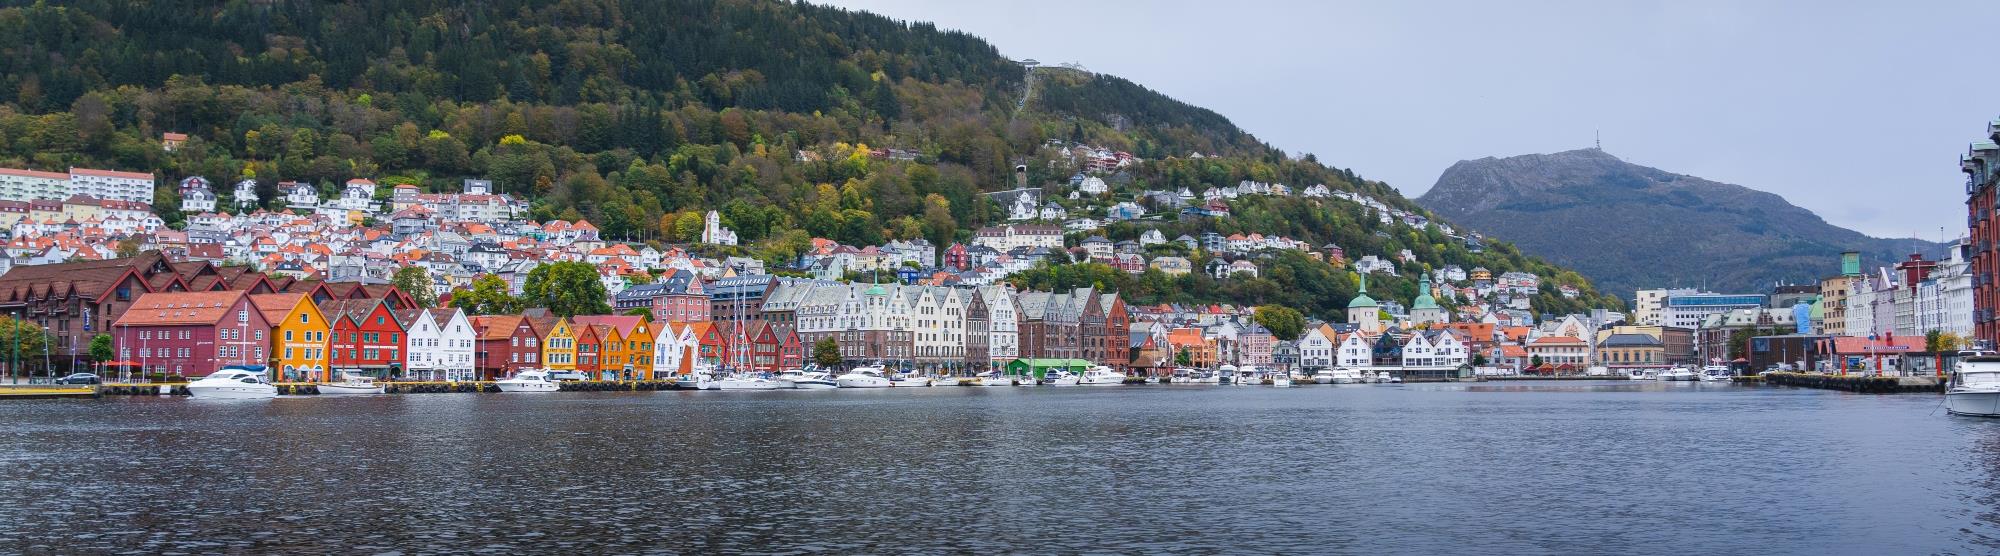 Bergen Kristiansand